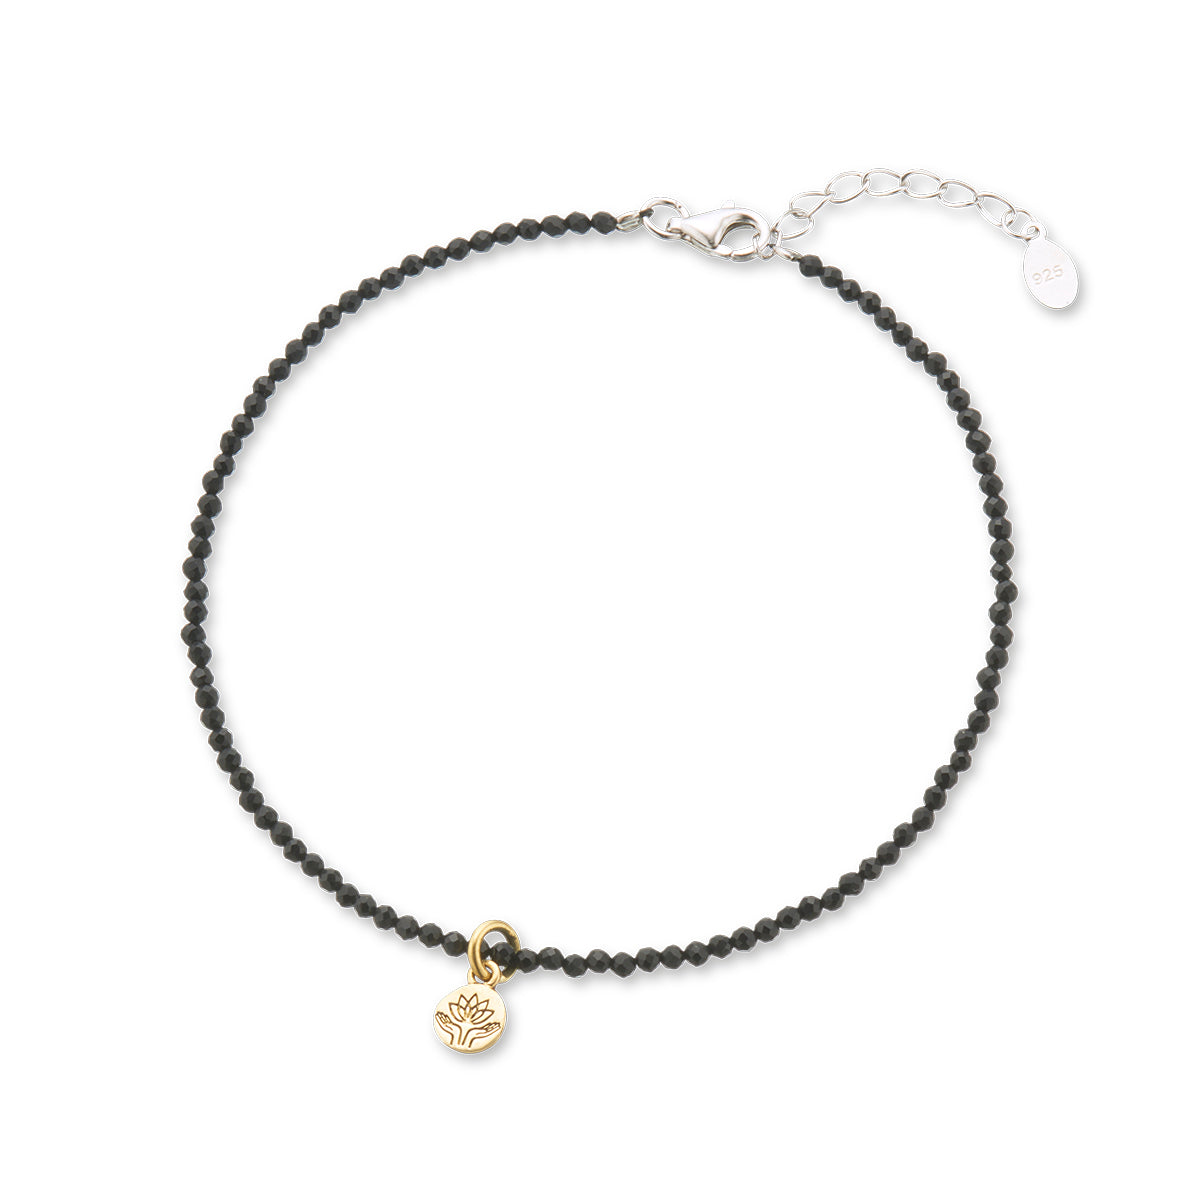 Onyx celestial gem bracelet